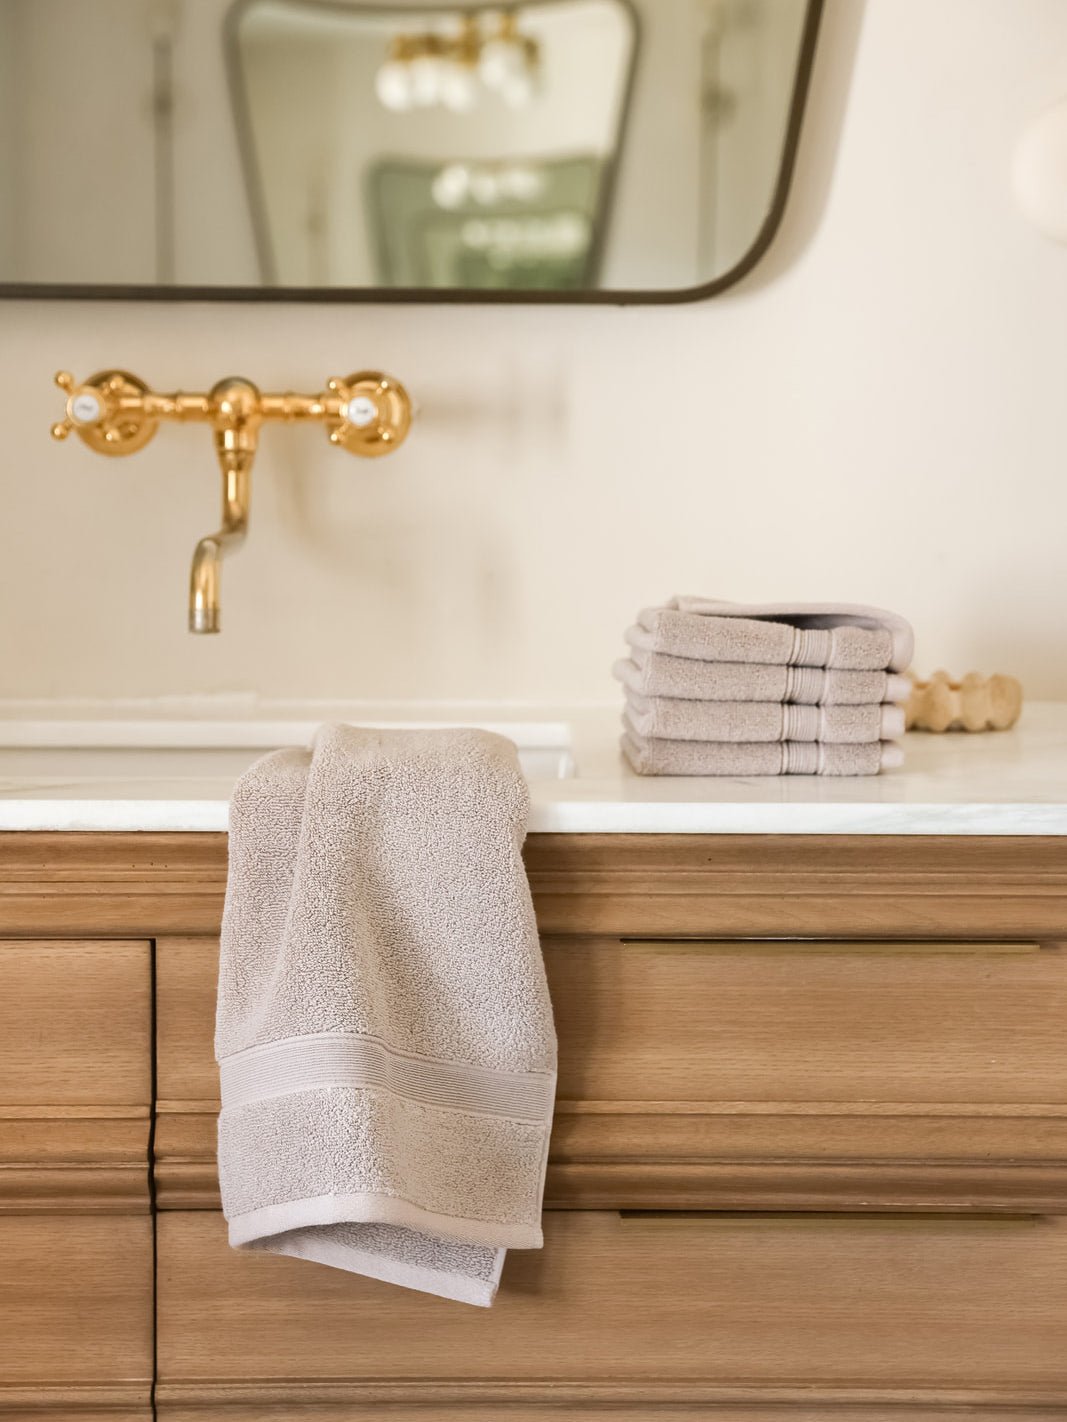 Sand hand towel and washcloths on bathroom sink 